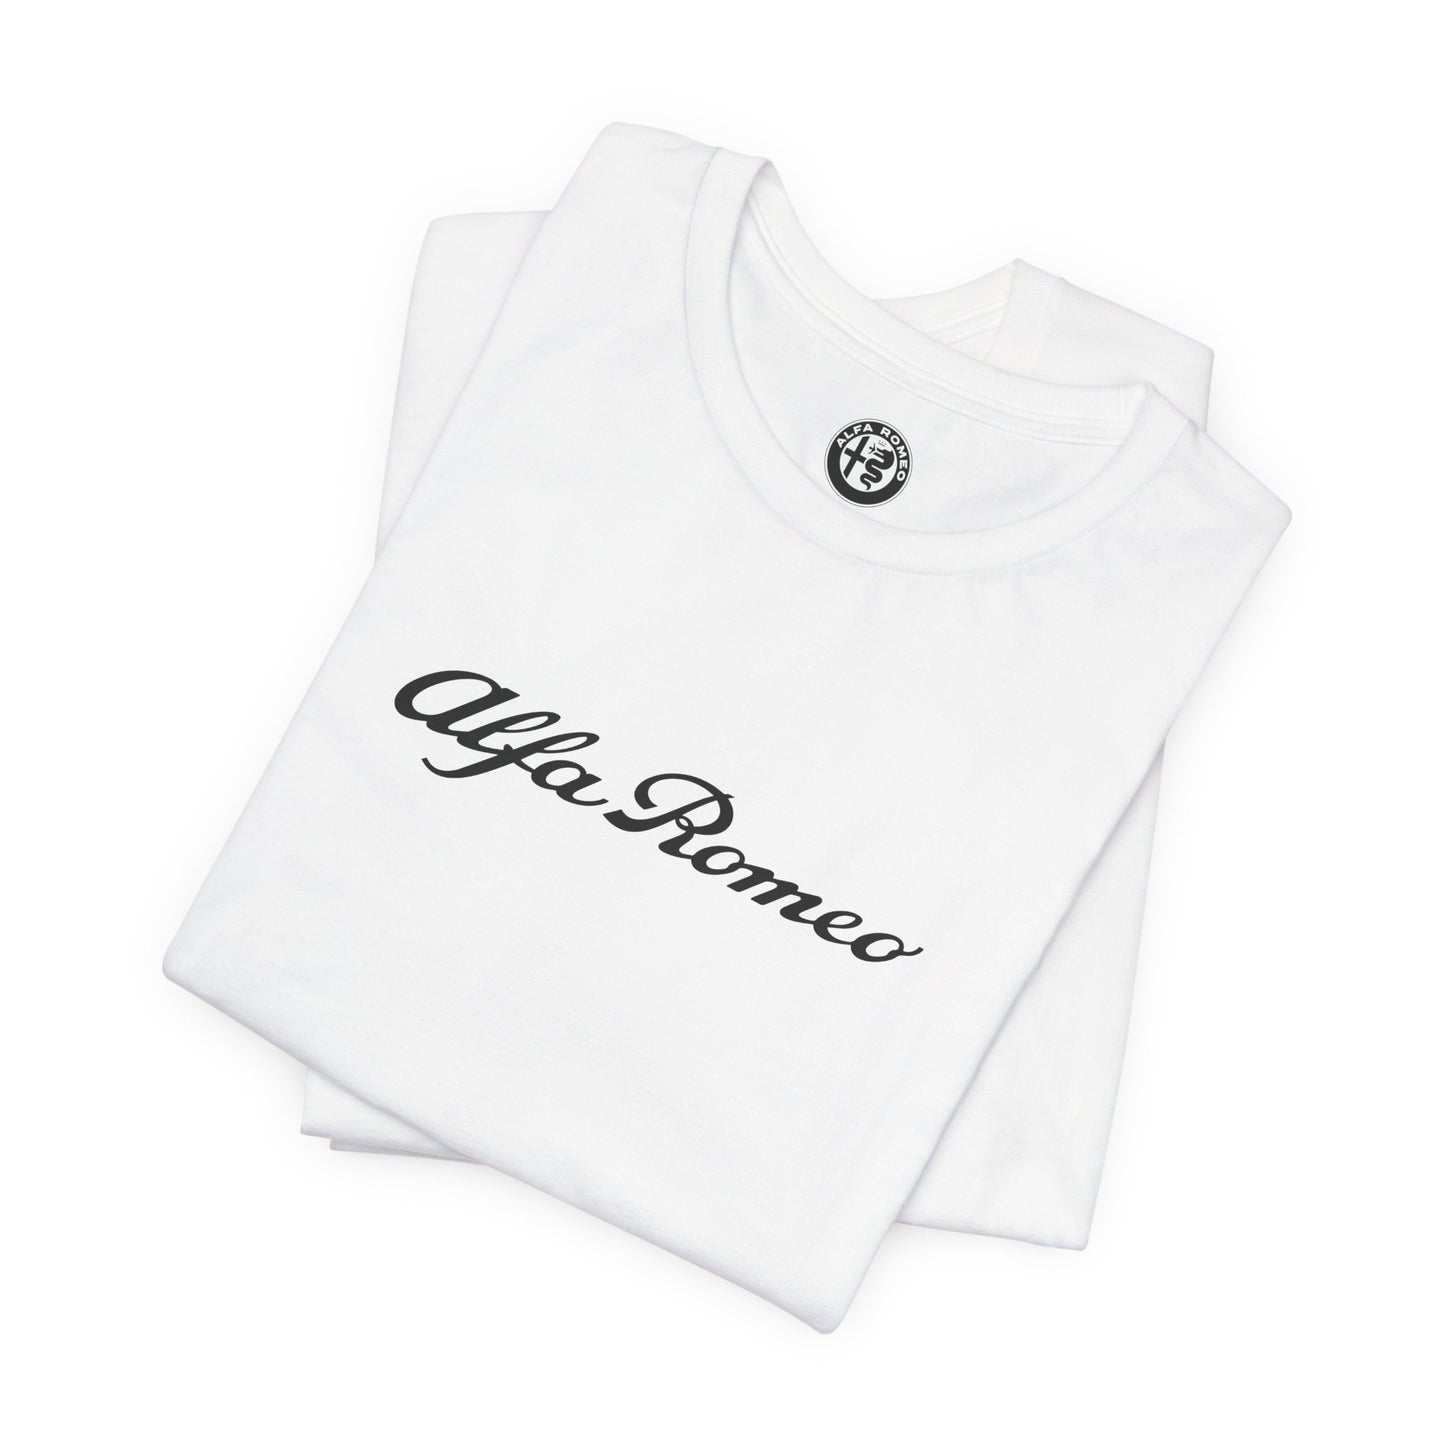 Alfa Romeo Bella+Canvas Camiseta de manga corta - Camiseta de algodón unisex ética - Made in USA